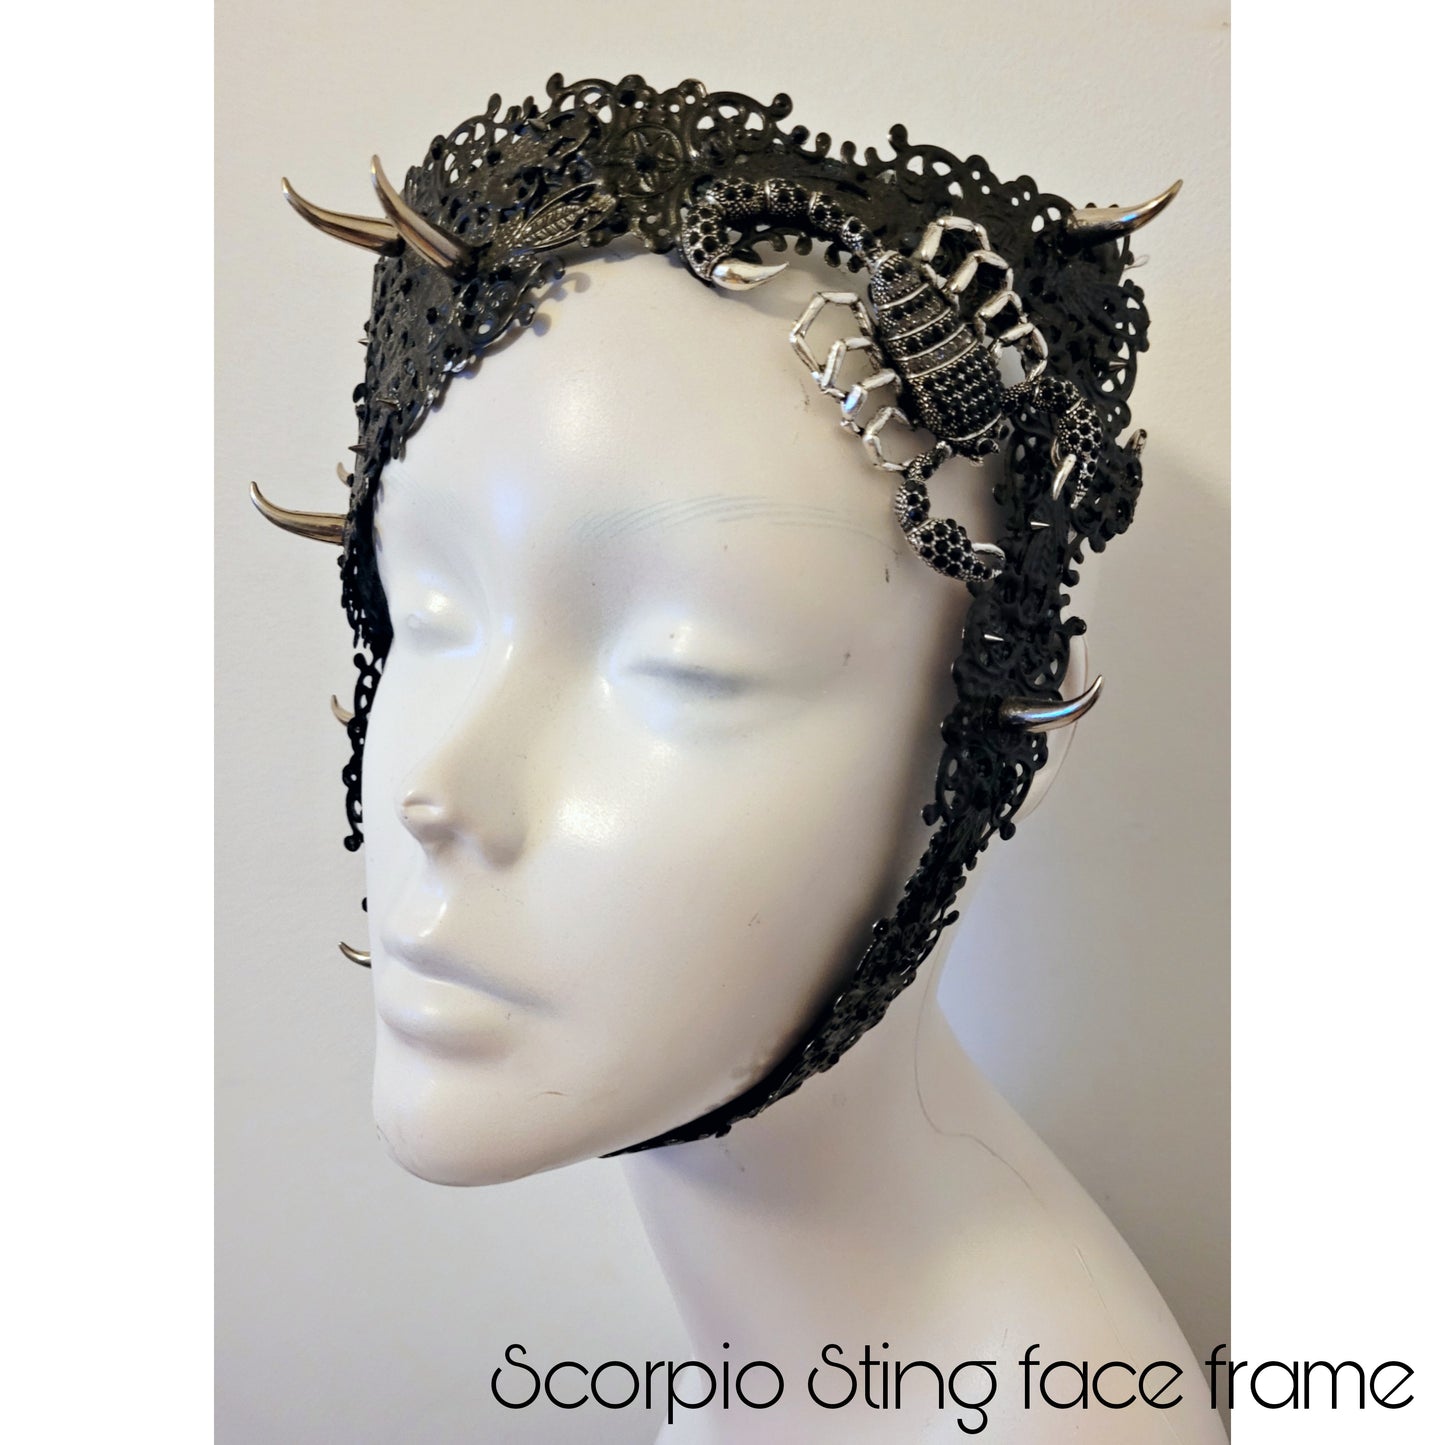 Scorpio Sting face frame, wearable art headpiece